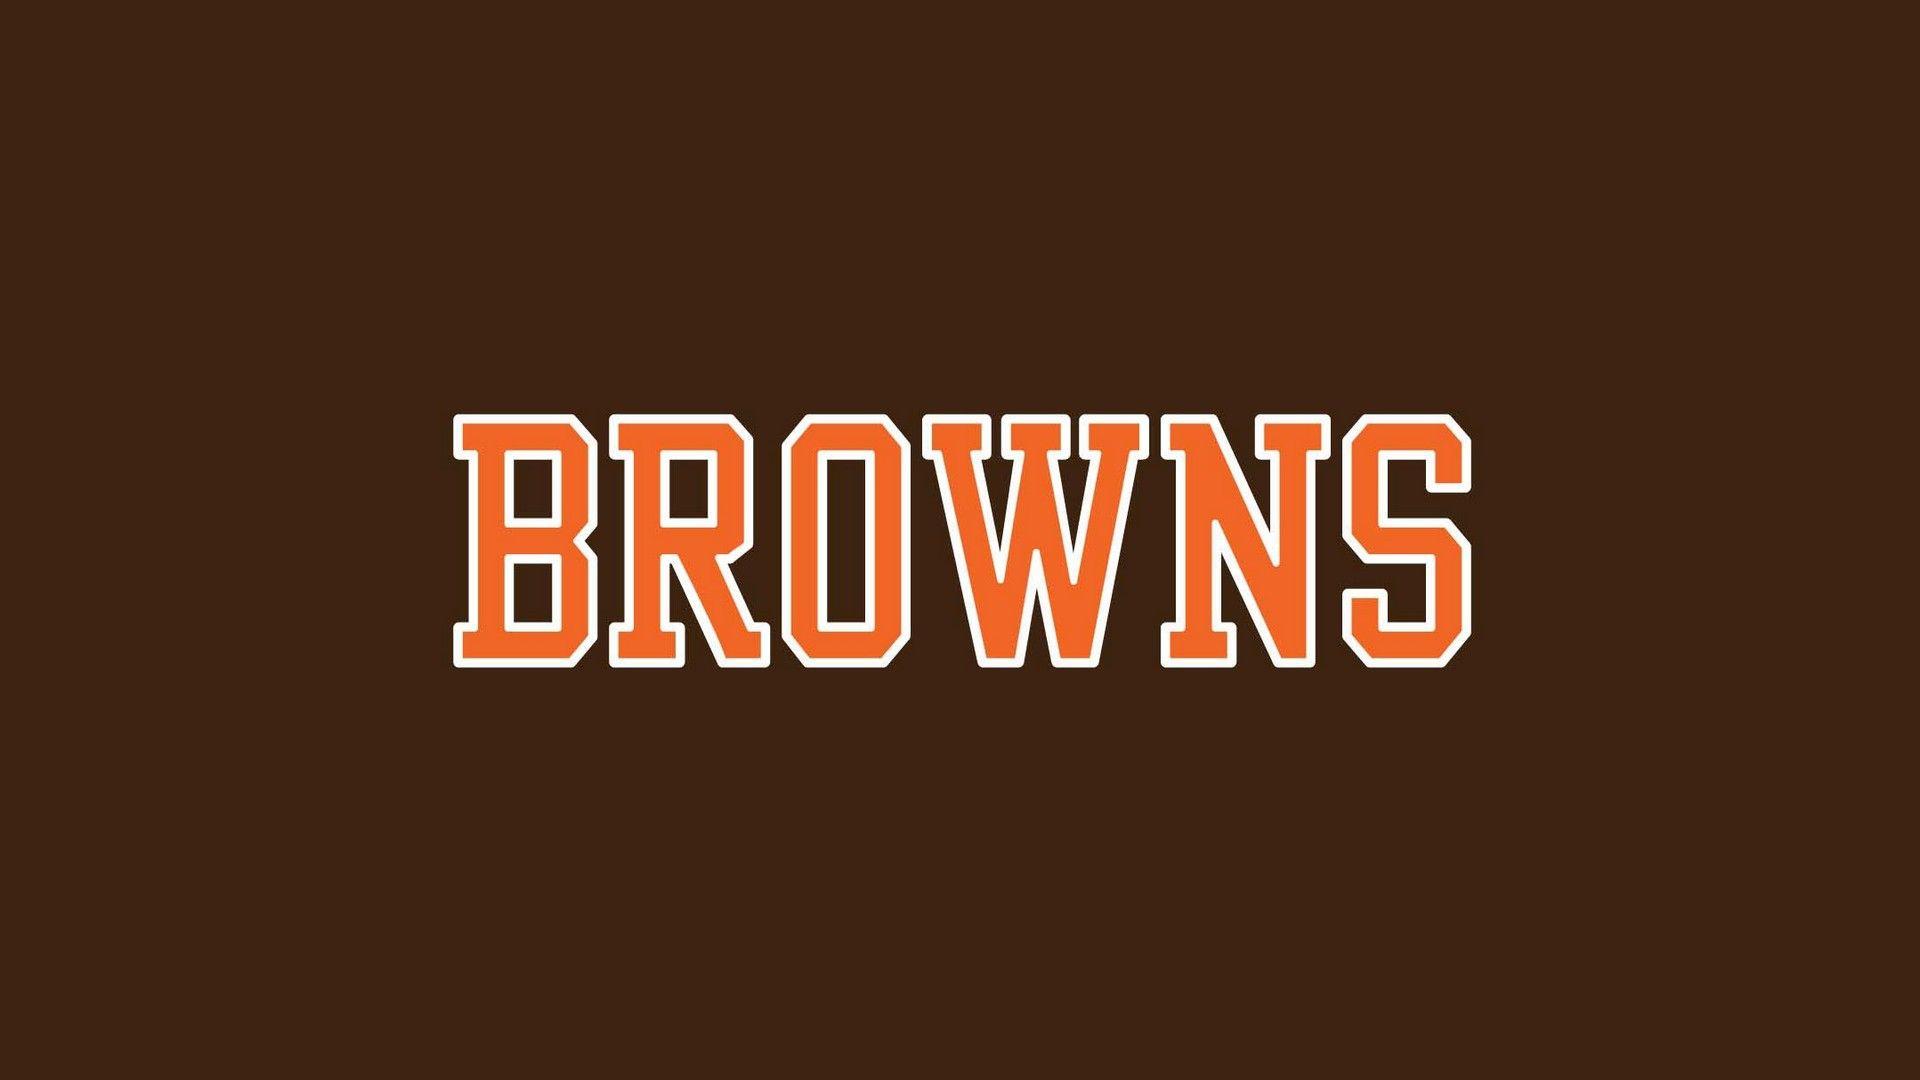 HD Cleveland Browns Wallpaper. Cleveland browns wallpaper, Brown wallpaper, Cleveland browns